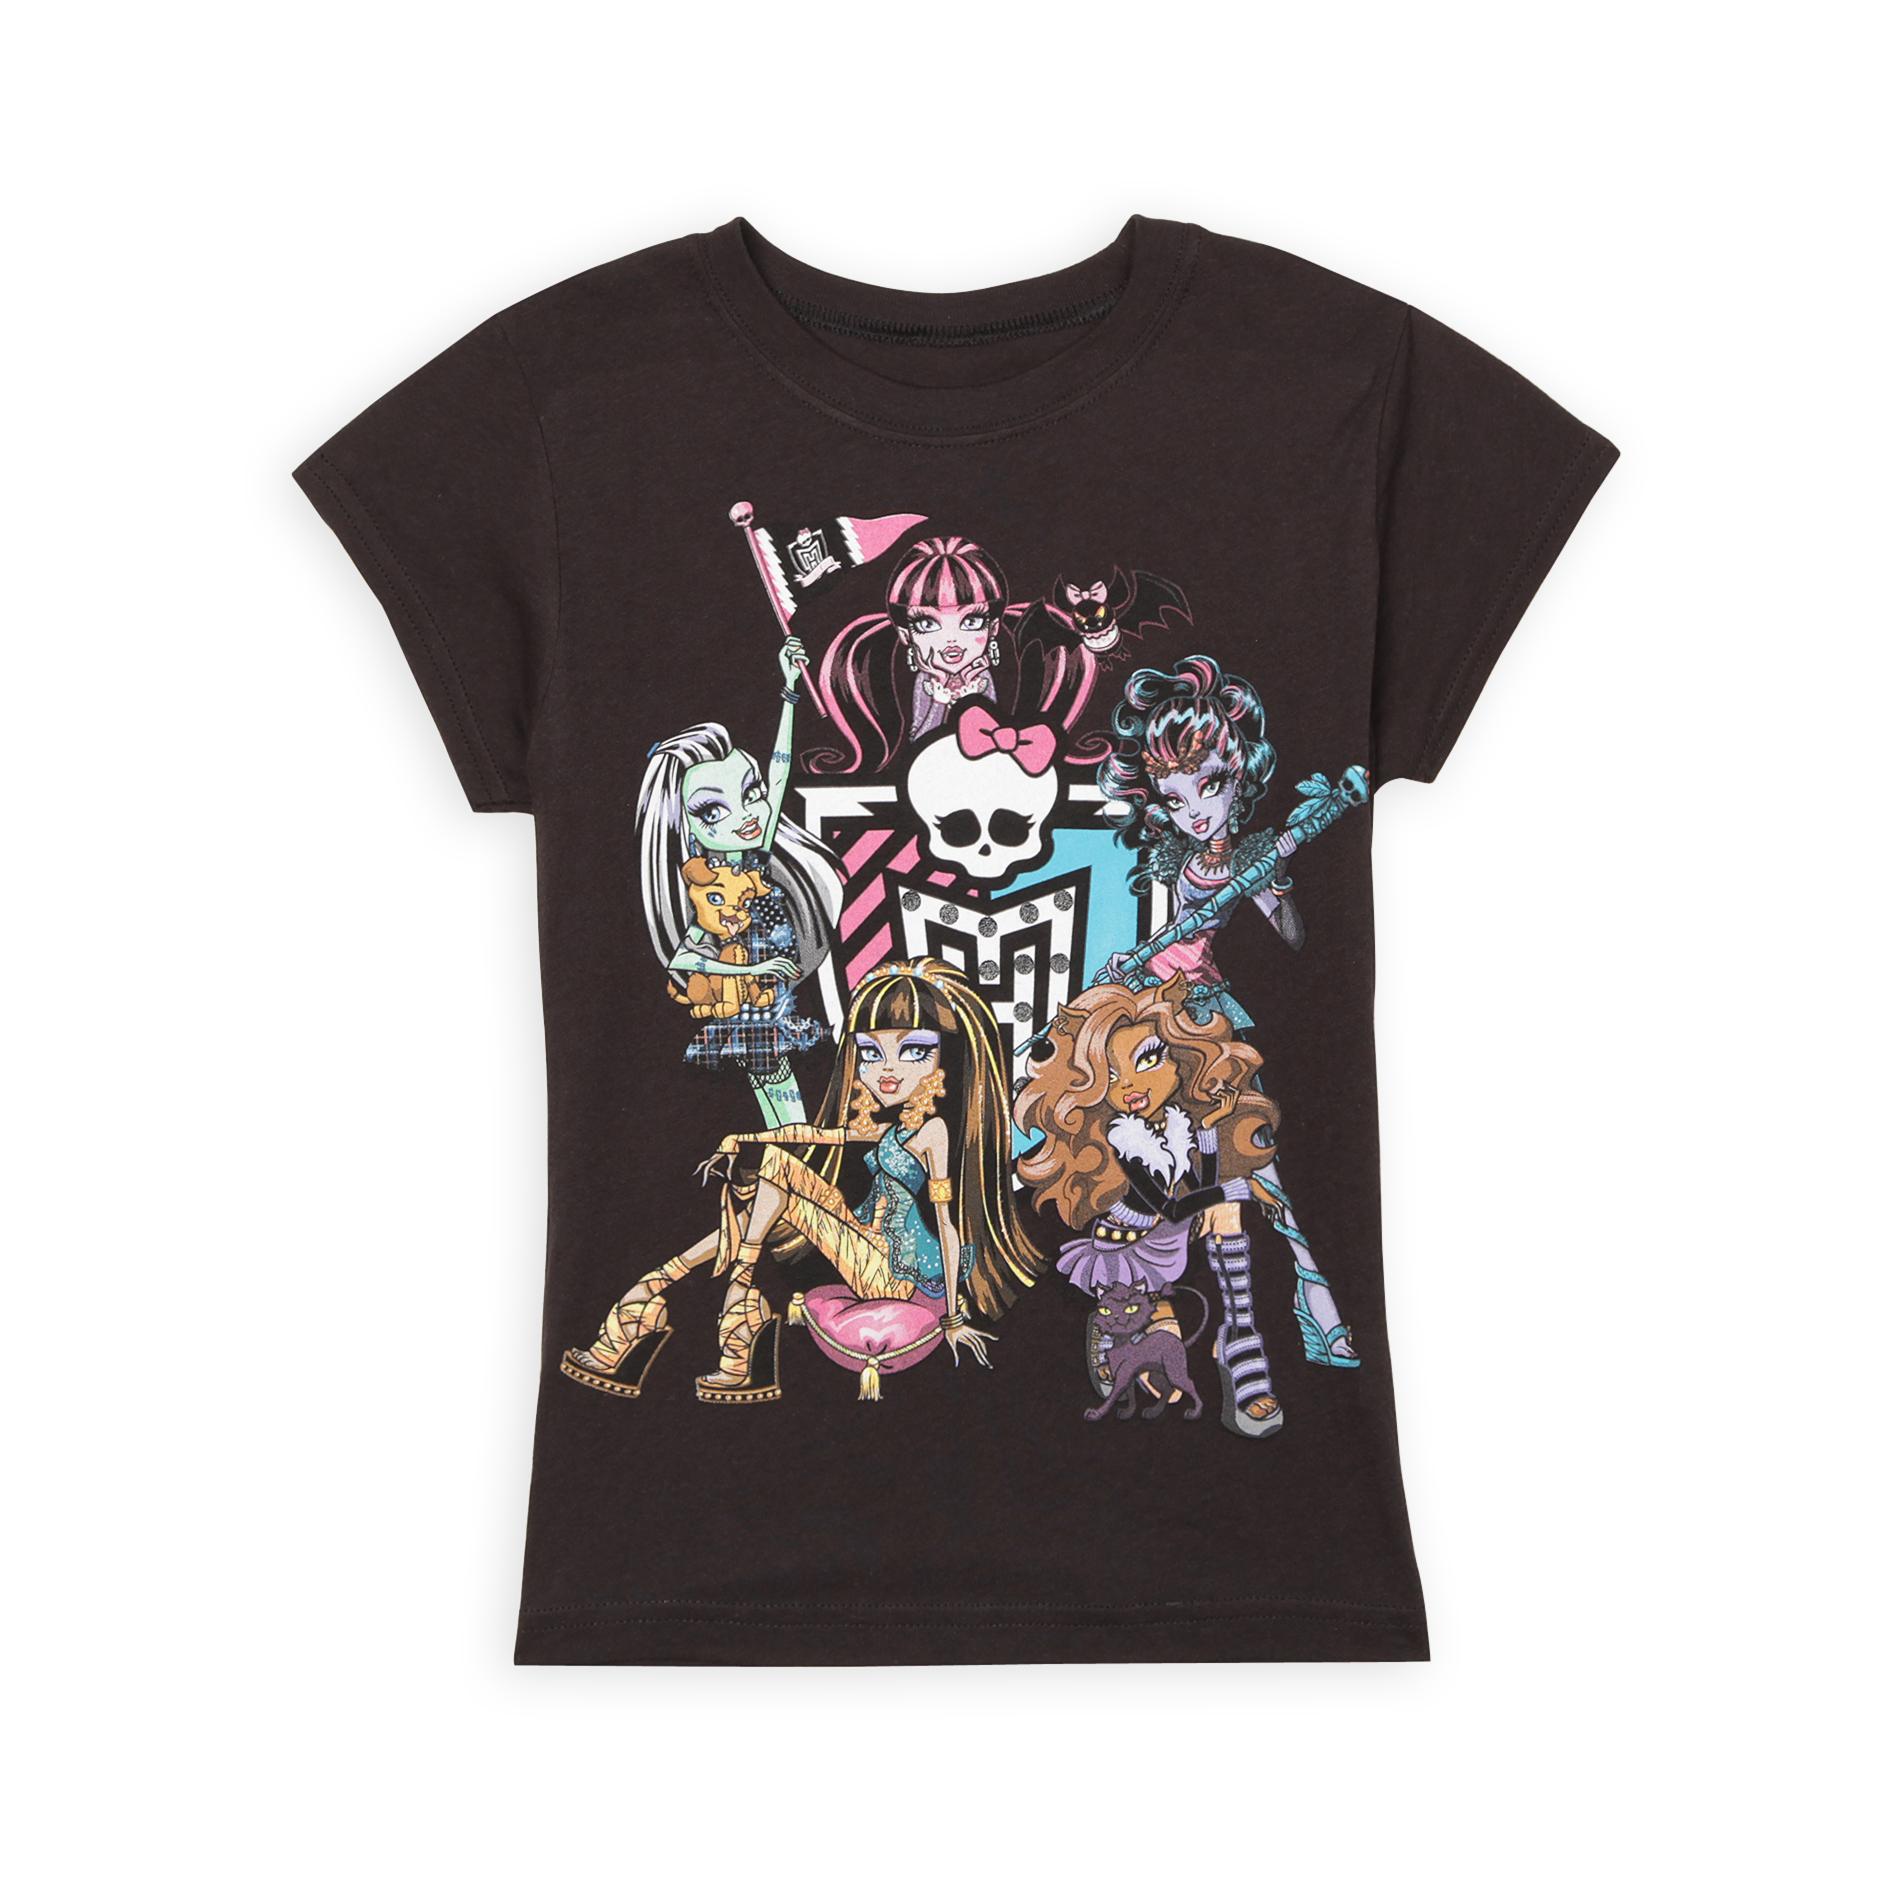 Monster High Girl's Cap-Sleeve Top